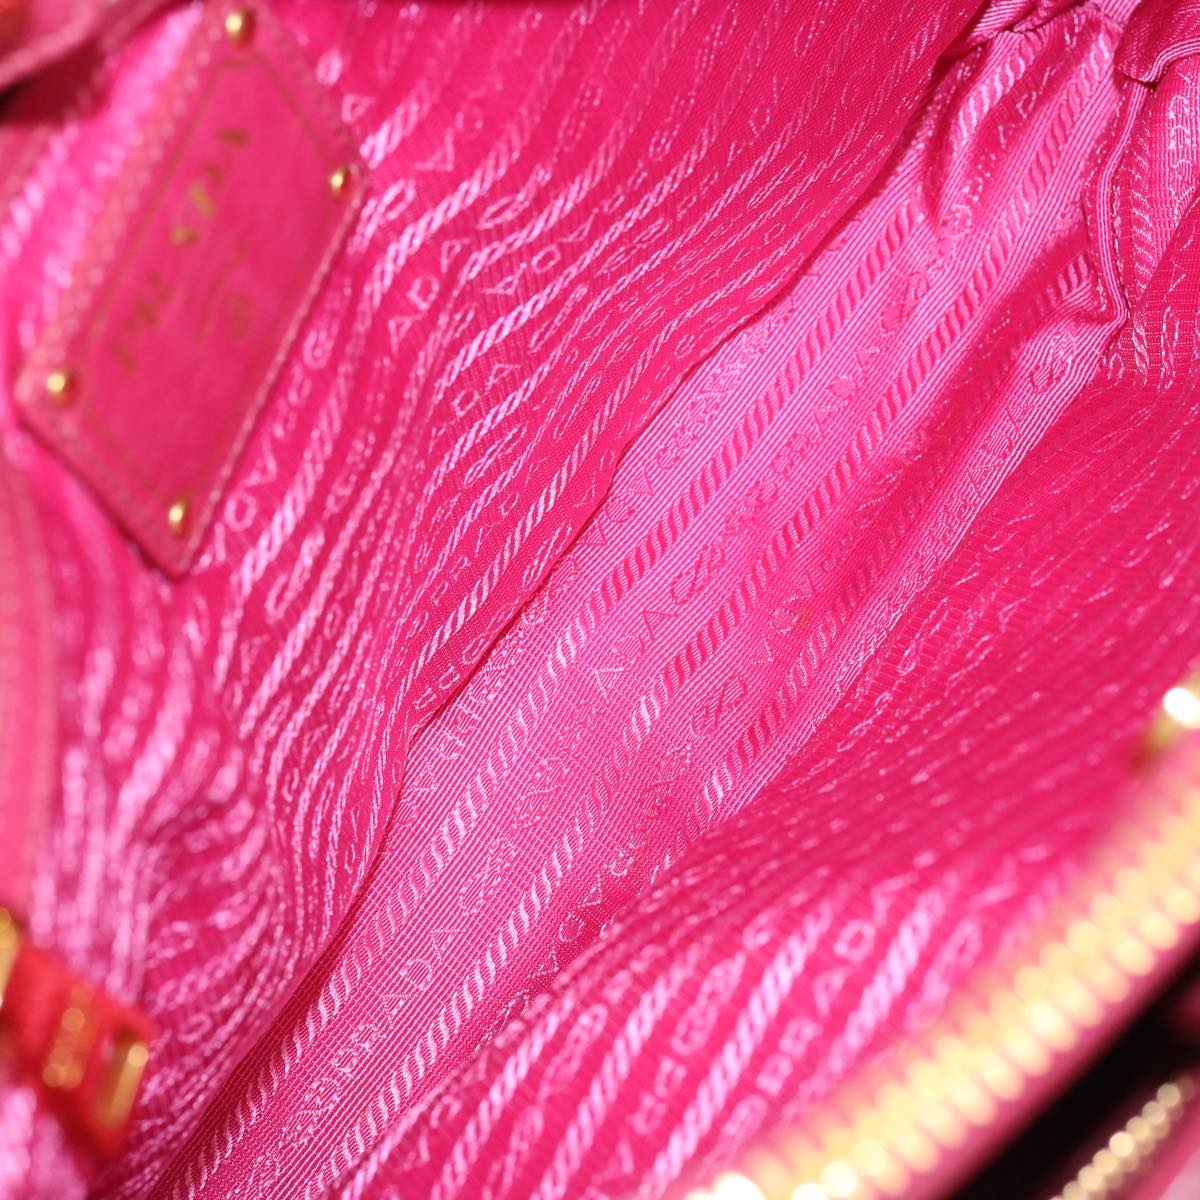 PRADA Hand Bag Leather 2way Pink Auth am6057